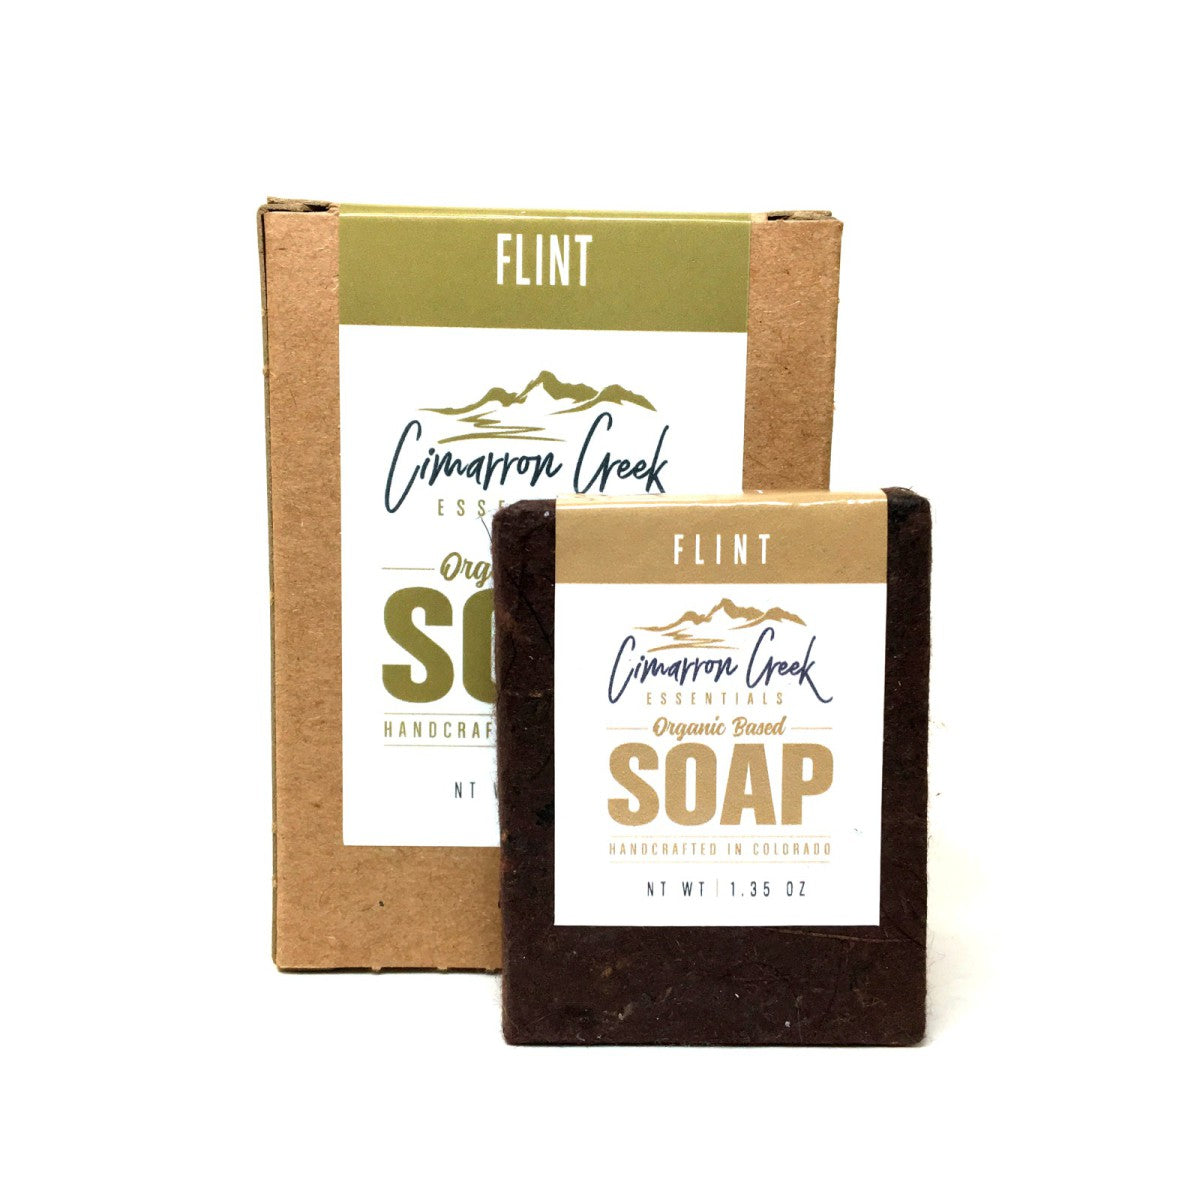 Flint Organic Bar Soap 5.4oz